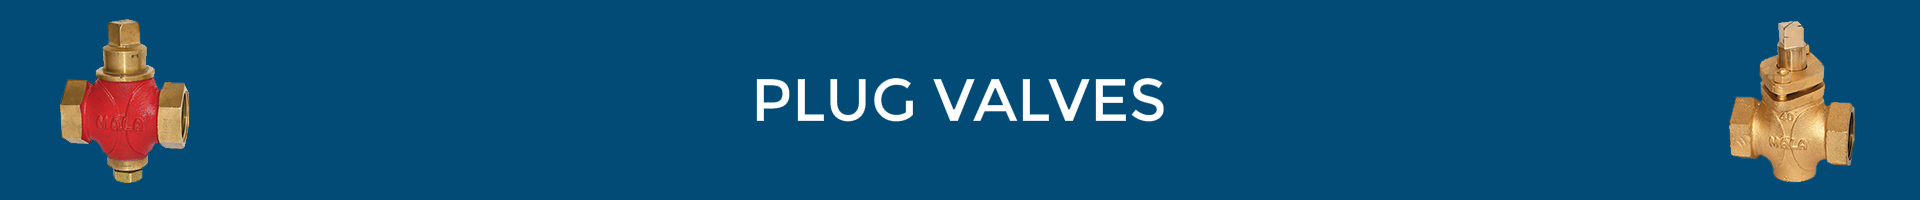 plug_valves-banner